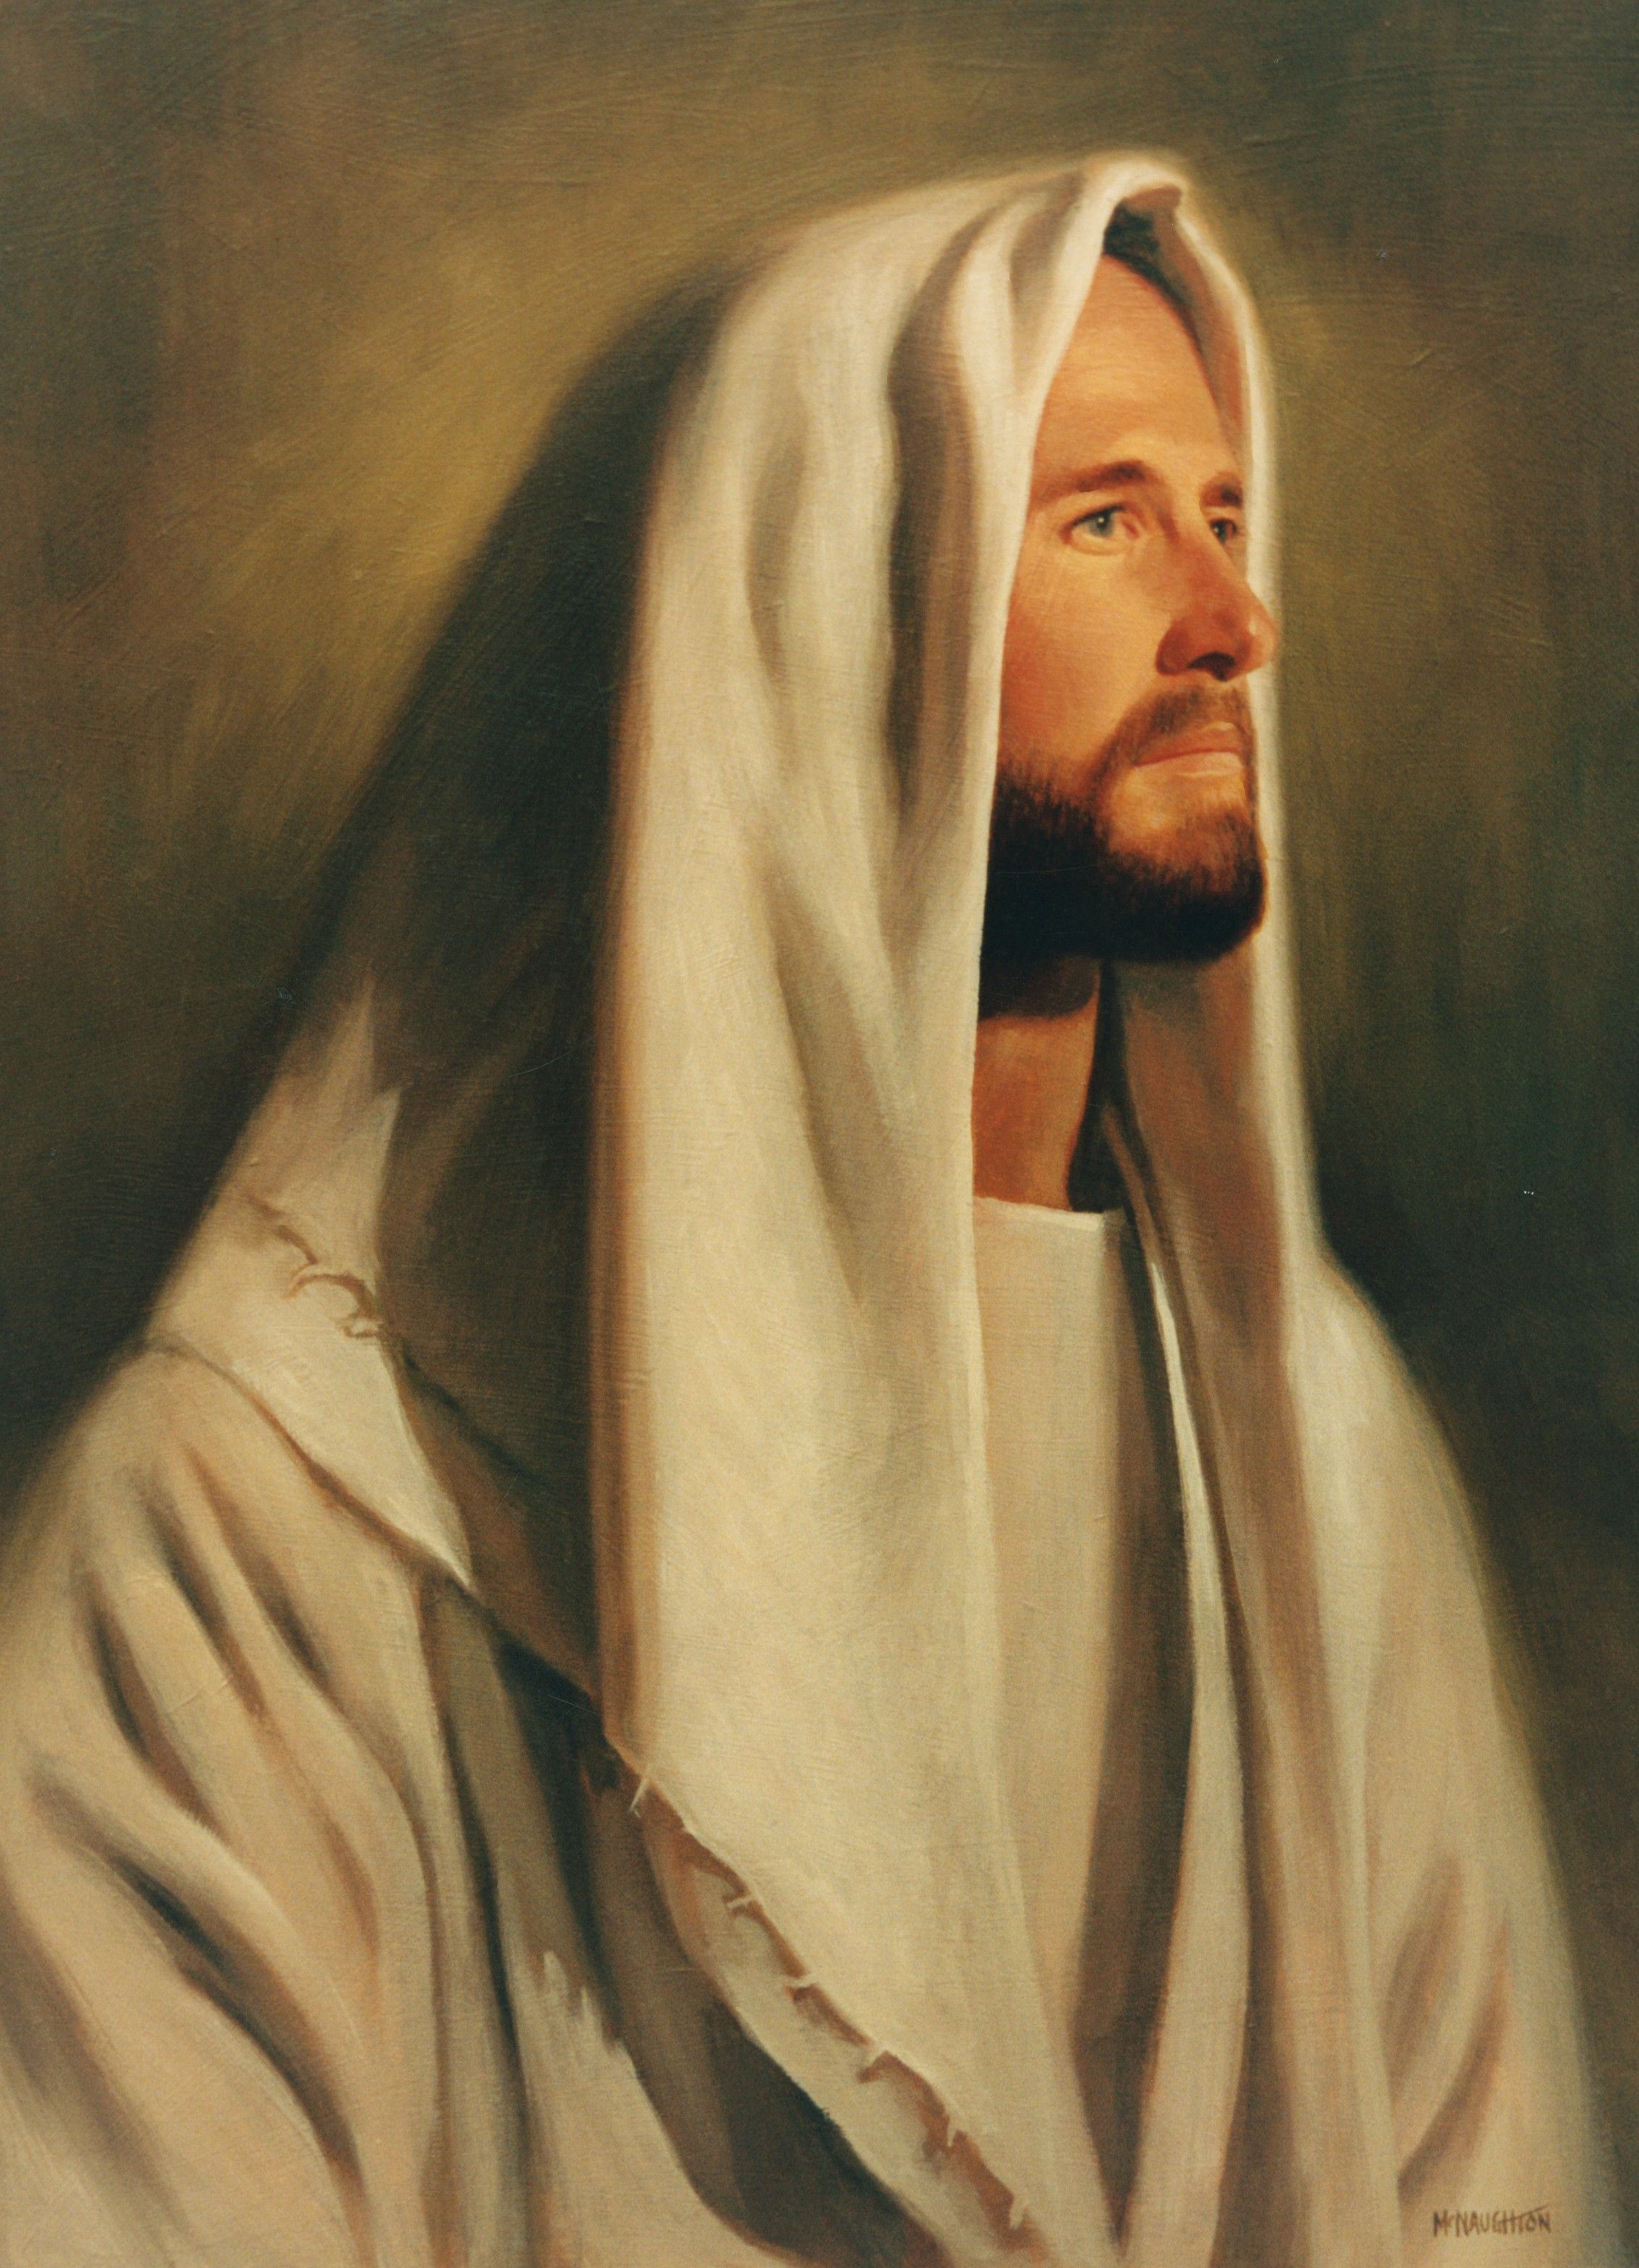 A portrait of the Savior by Jon McNaughton